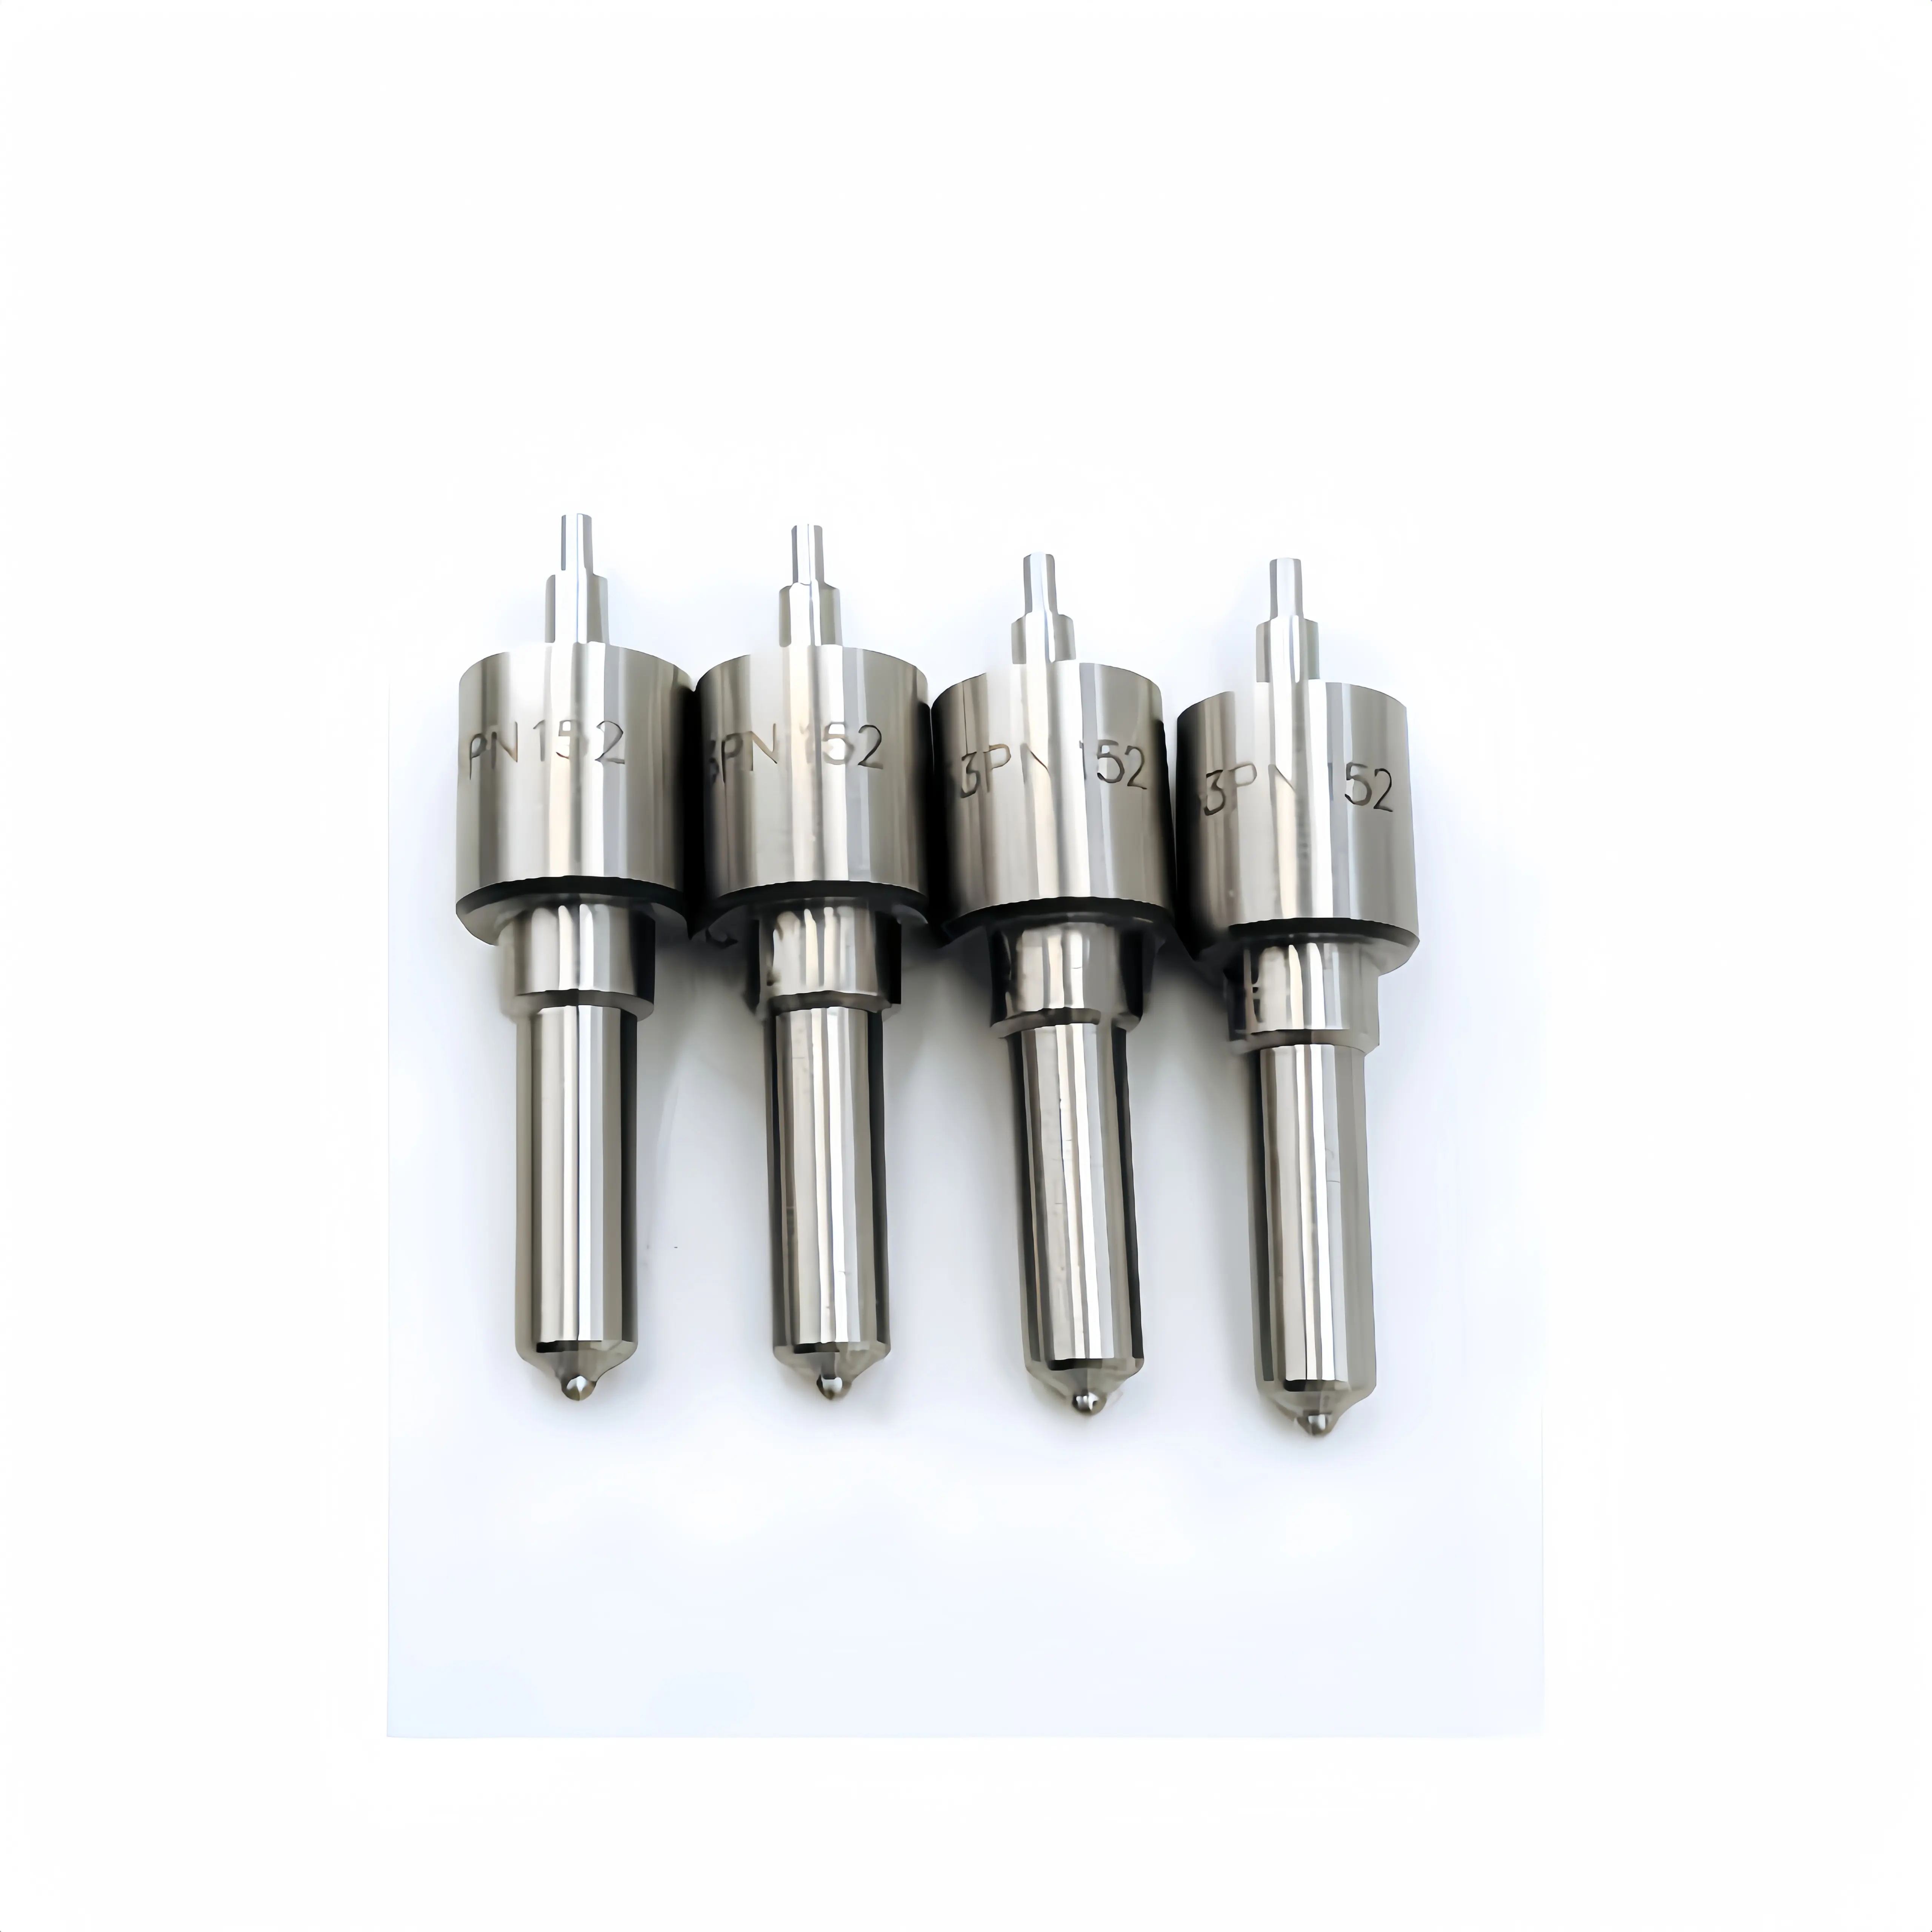 V3307 105017-3950 Fuel Injector Nozzle DLLA150PN395 for Delphi JCB Perkins 1013 1014 Engine Injector Assembly Parts